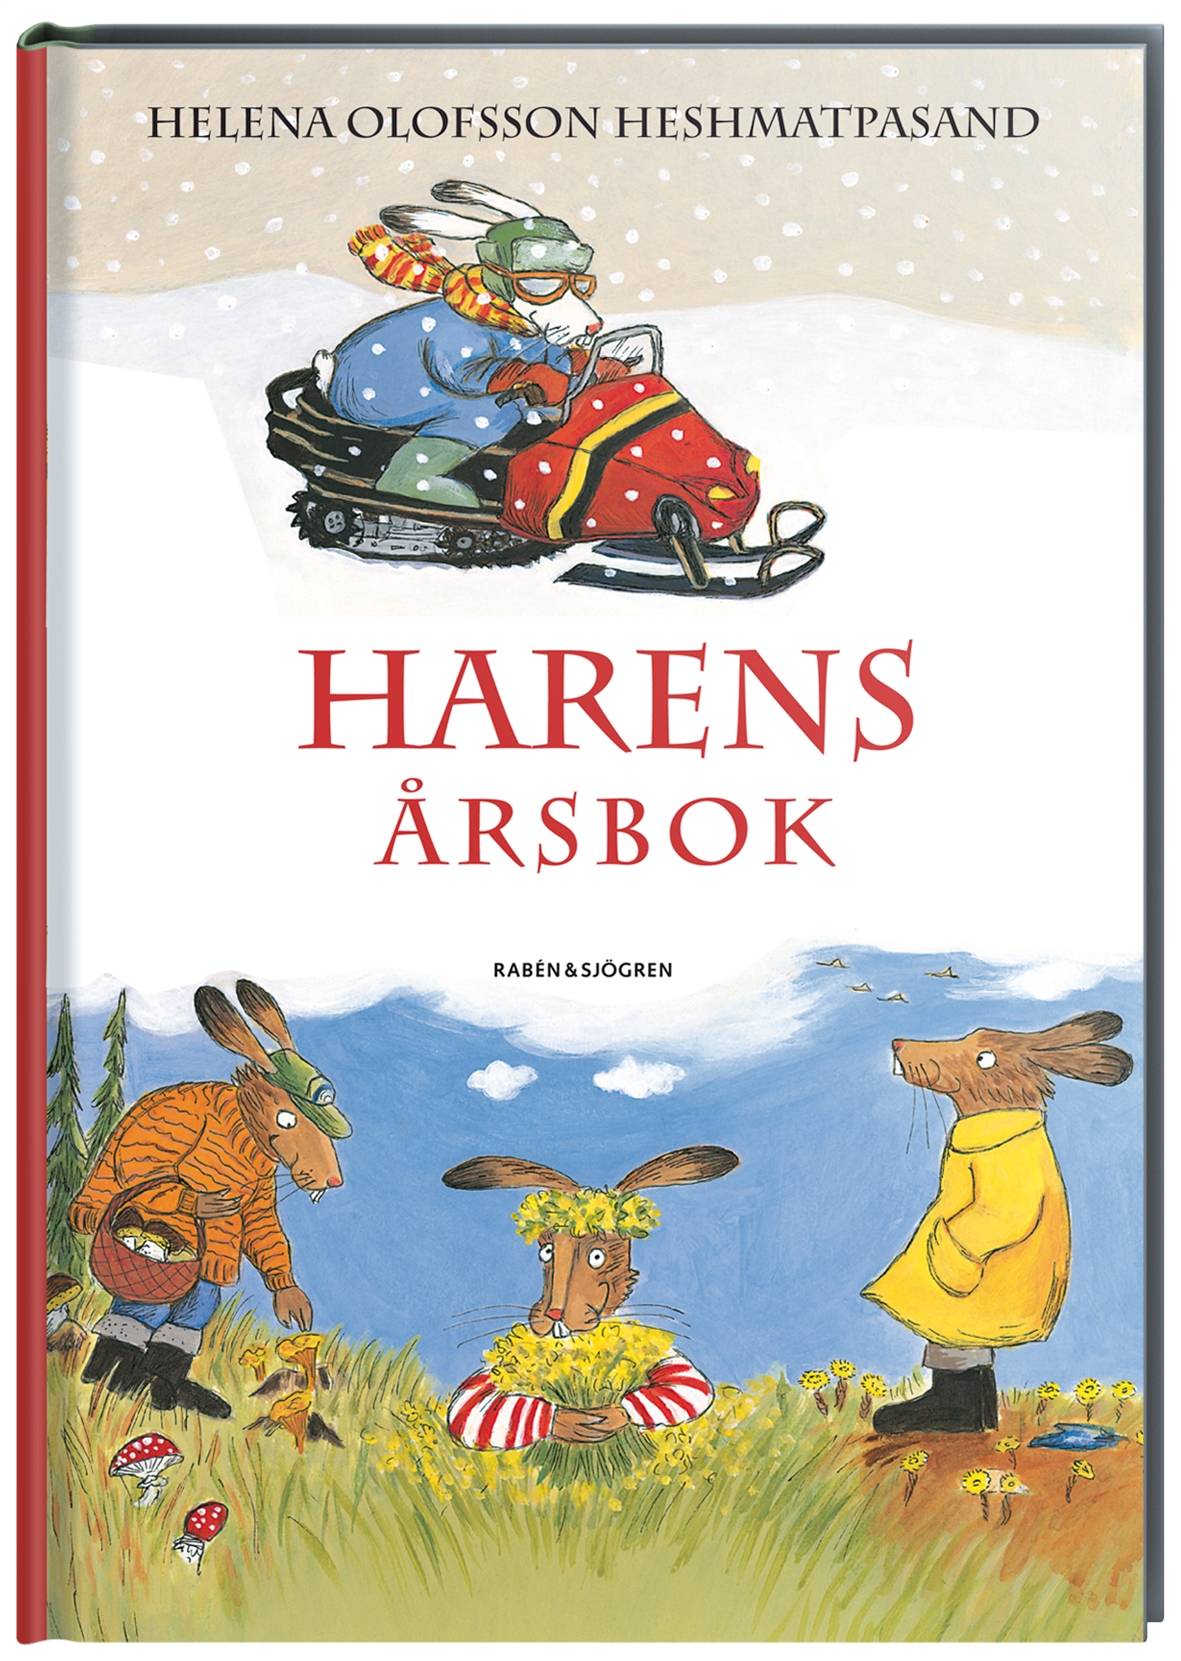 Harens årsbok